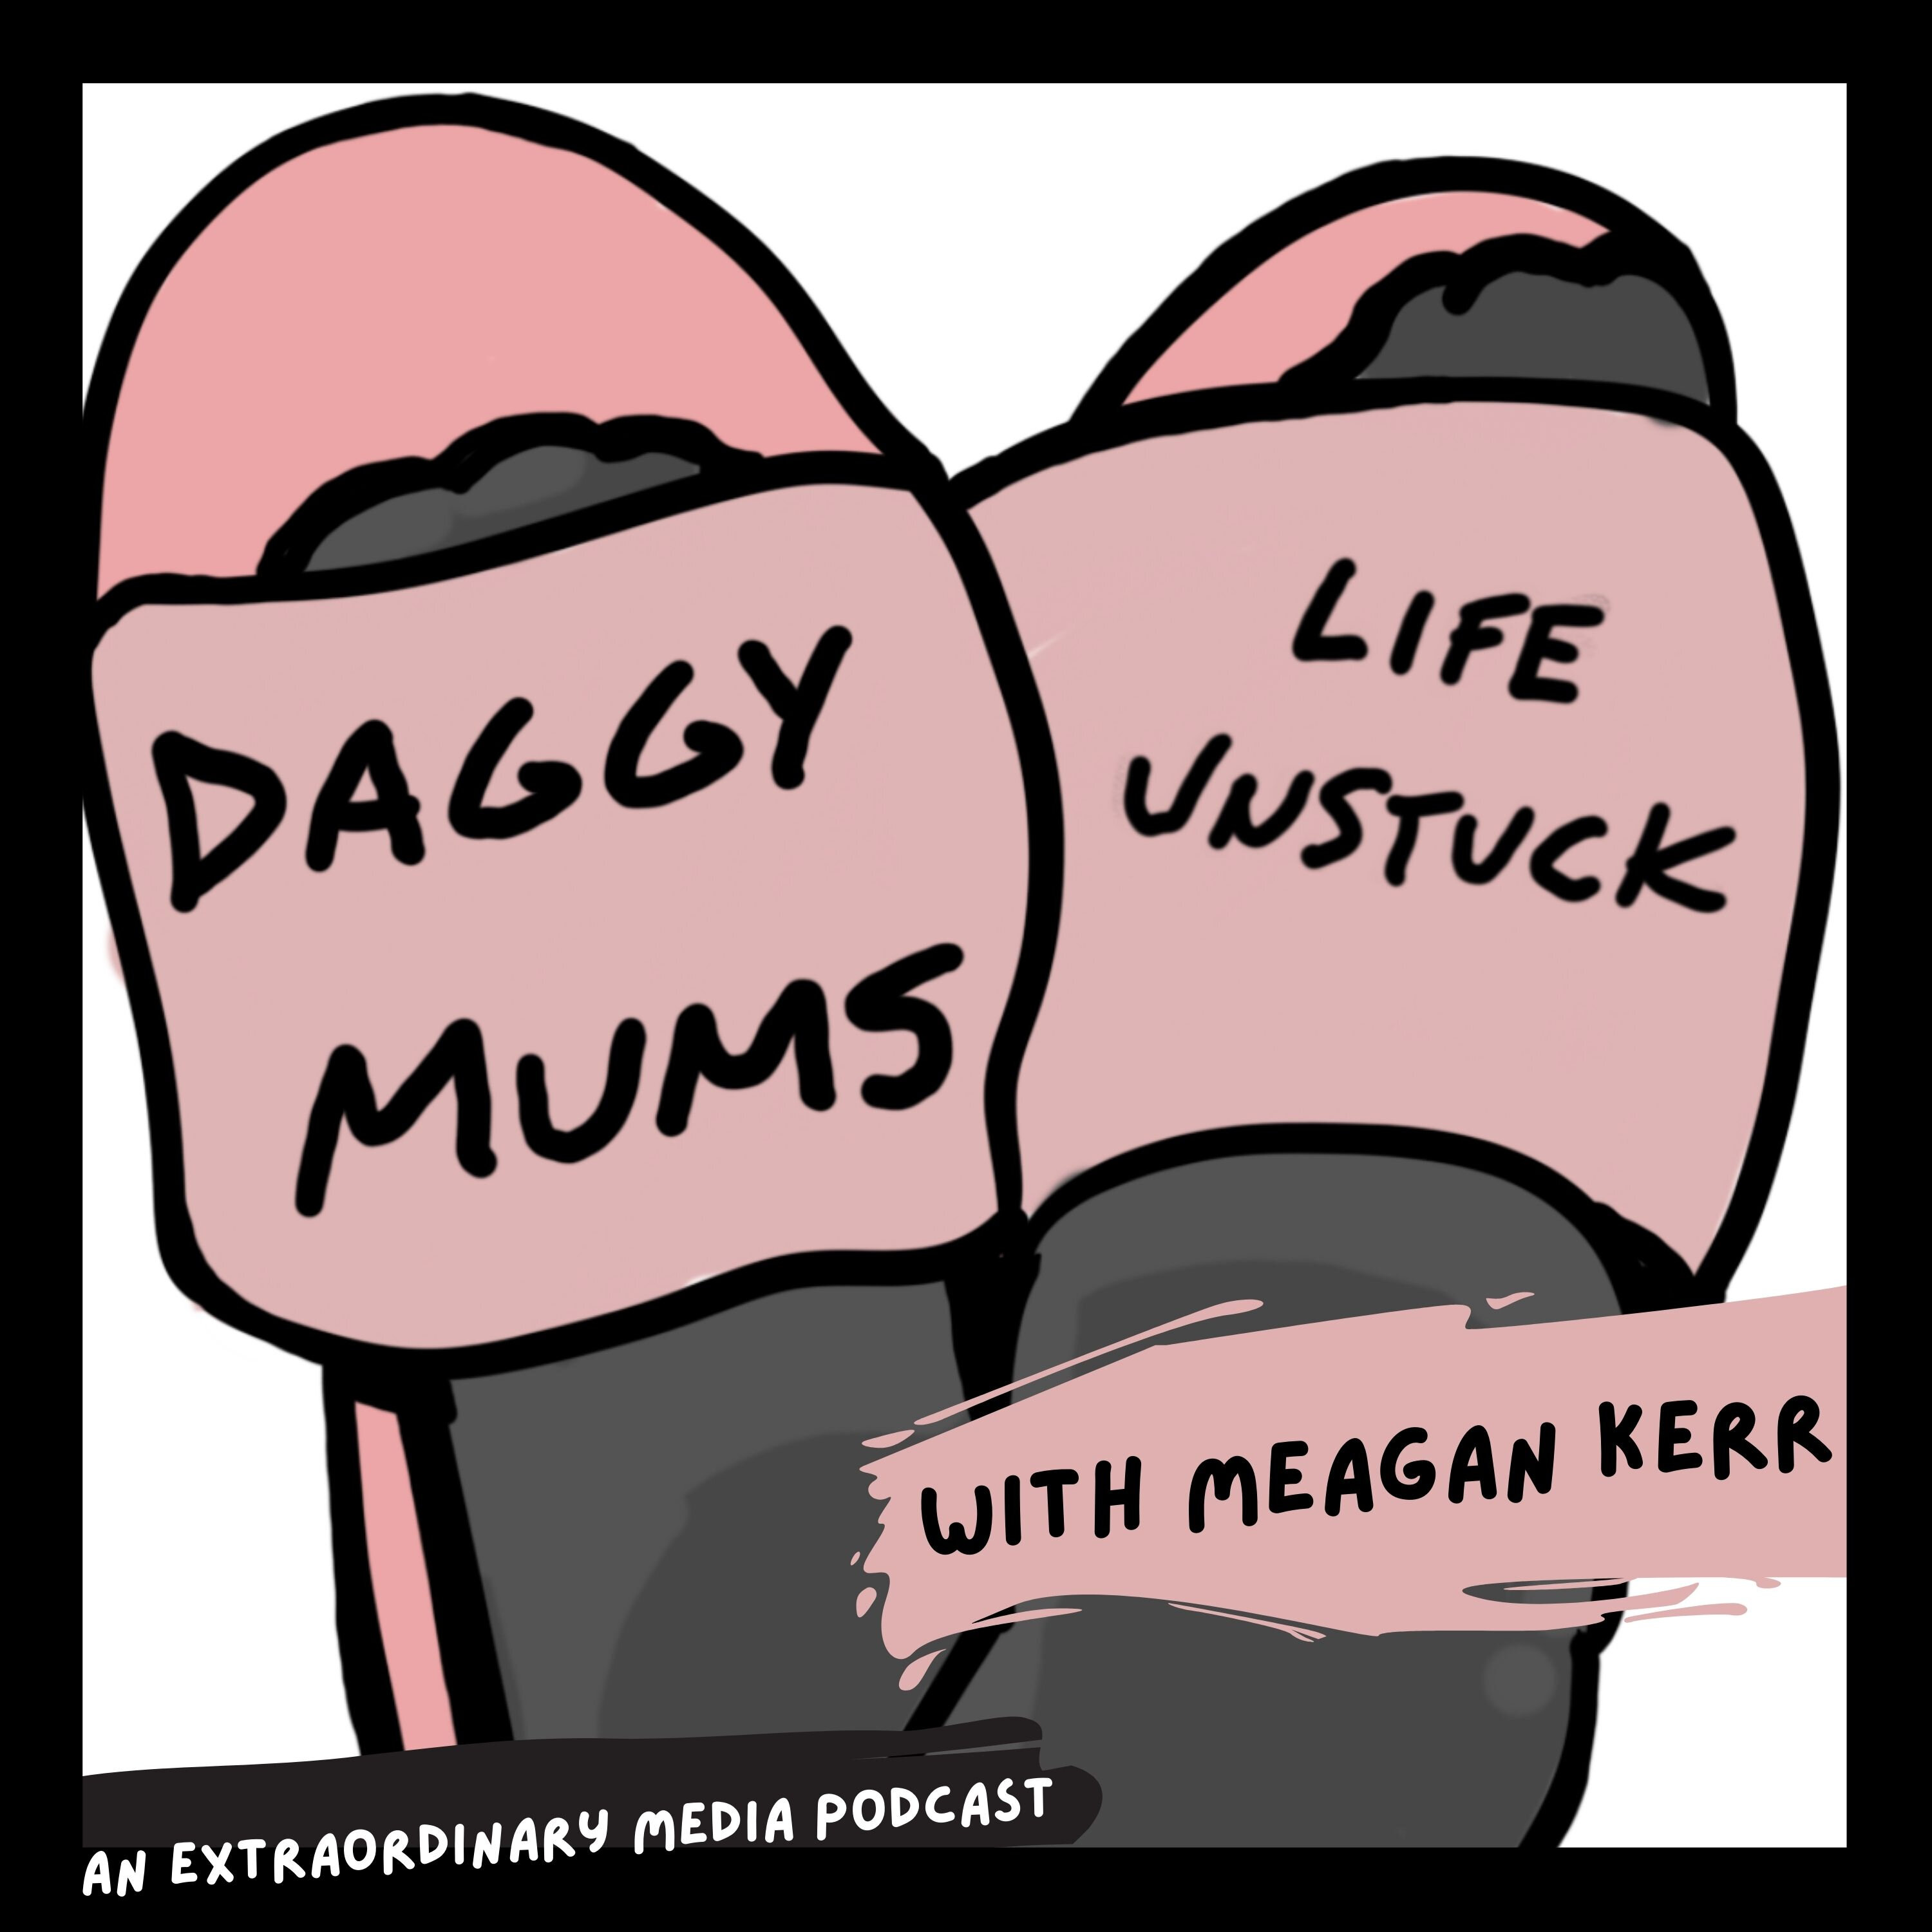 Daggy Mums Life Unstuck podcast show image